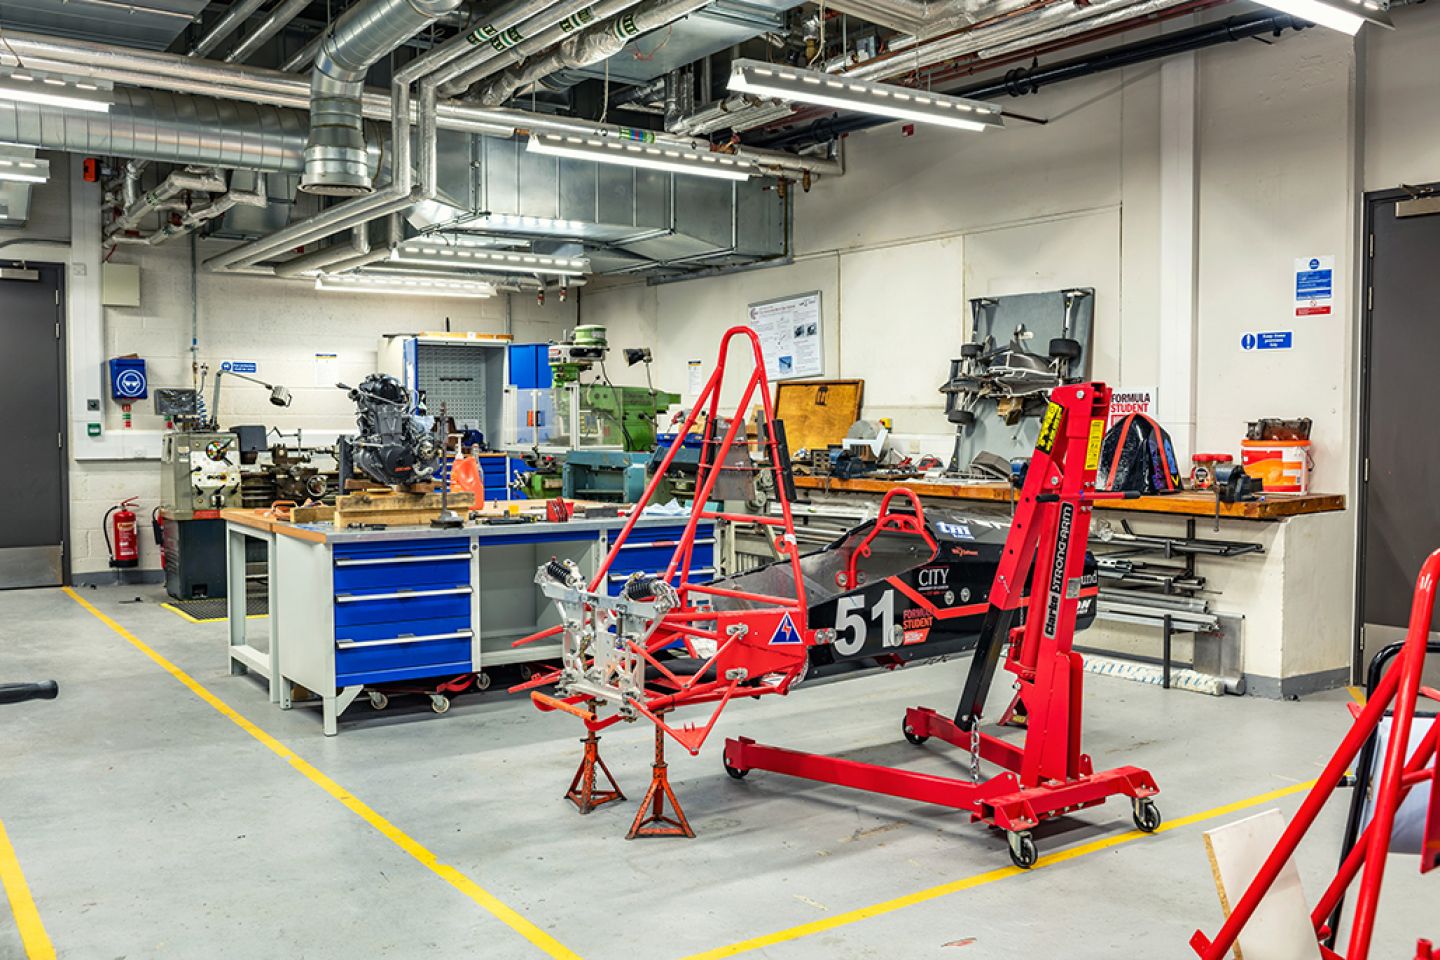 Engineering labs showing city formula racing car